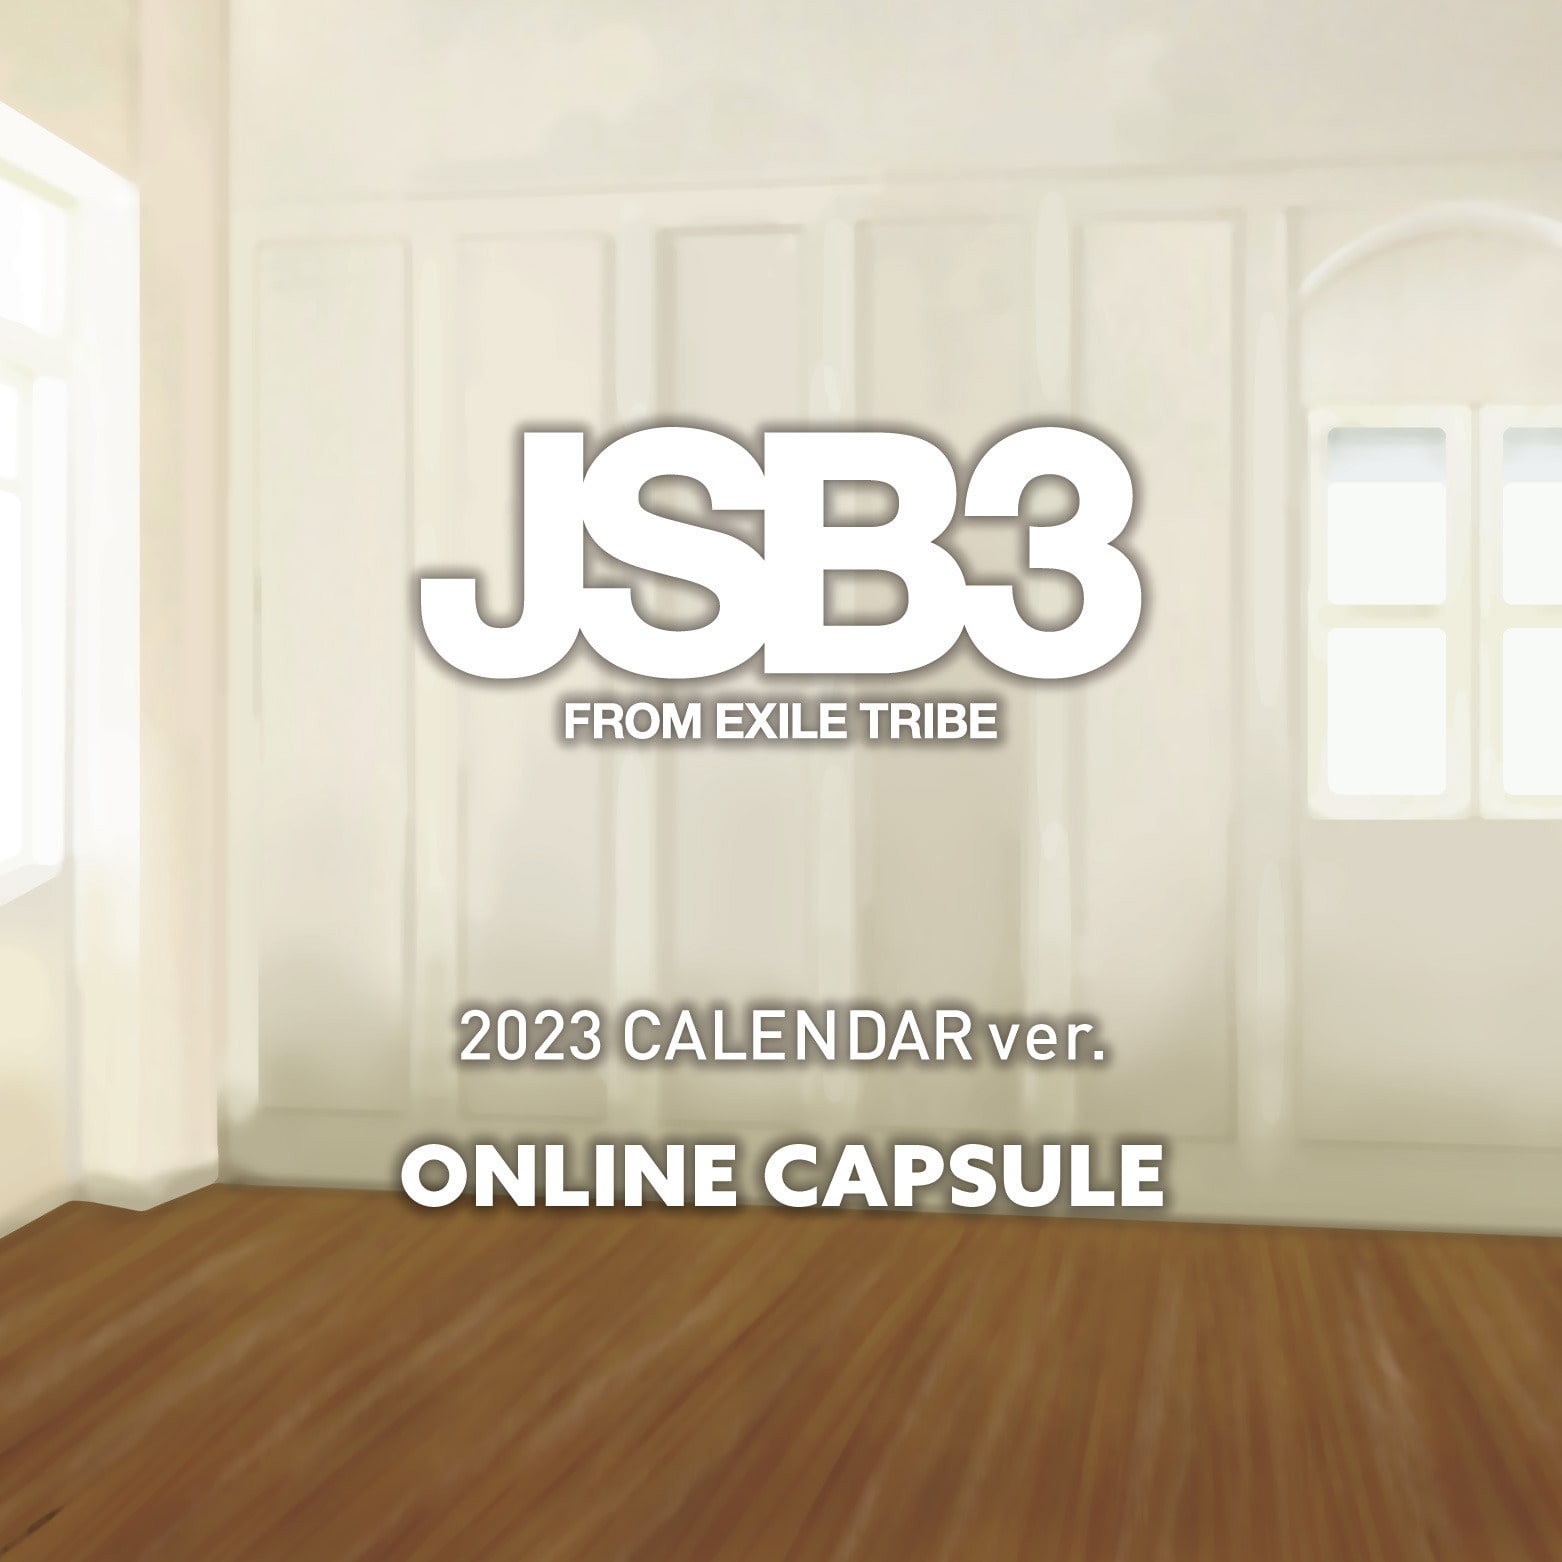 JSB3 2023 CALENDAR